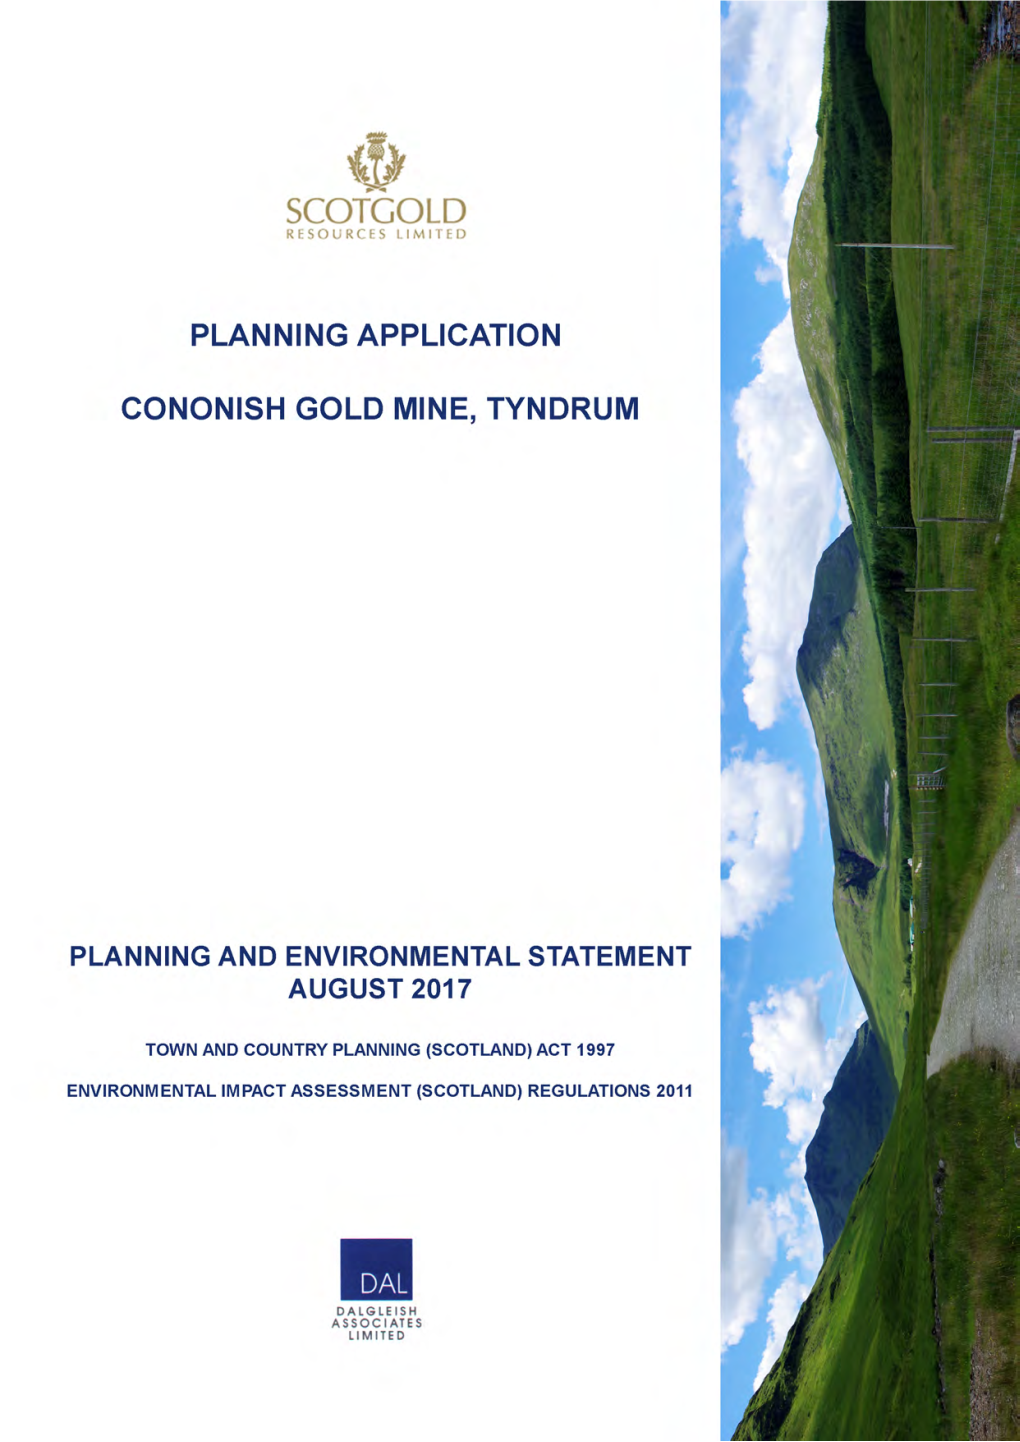 Scotgold Cononish Gold Mine. Planning